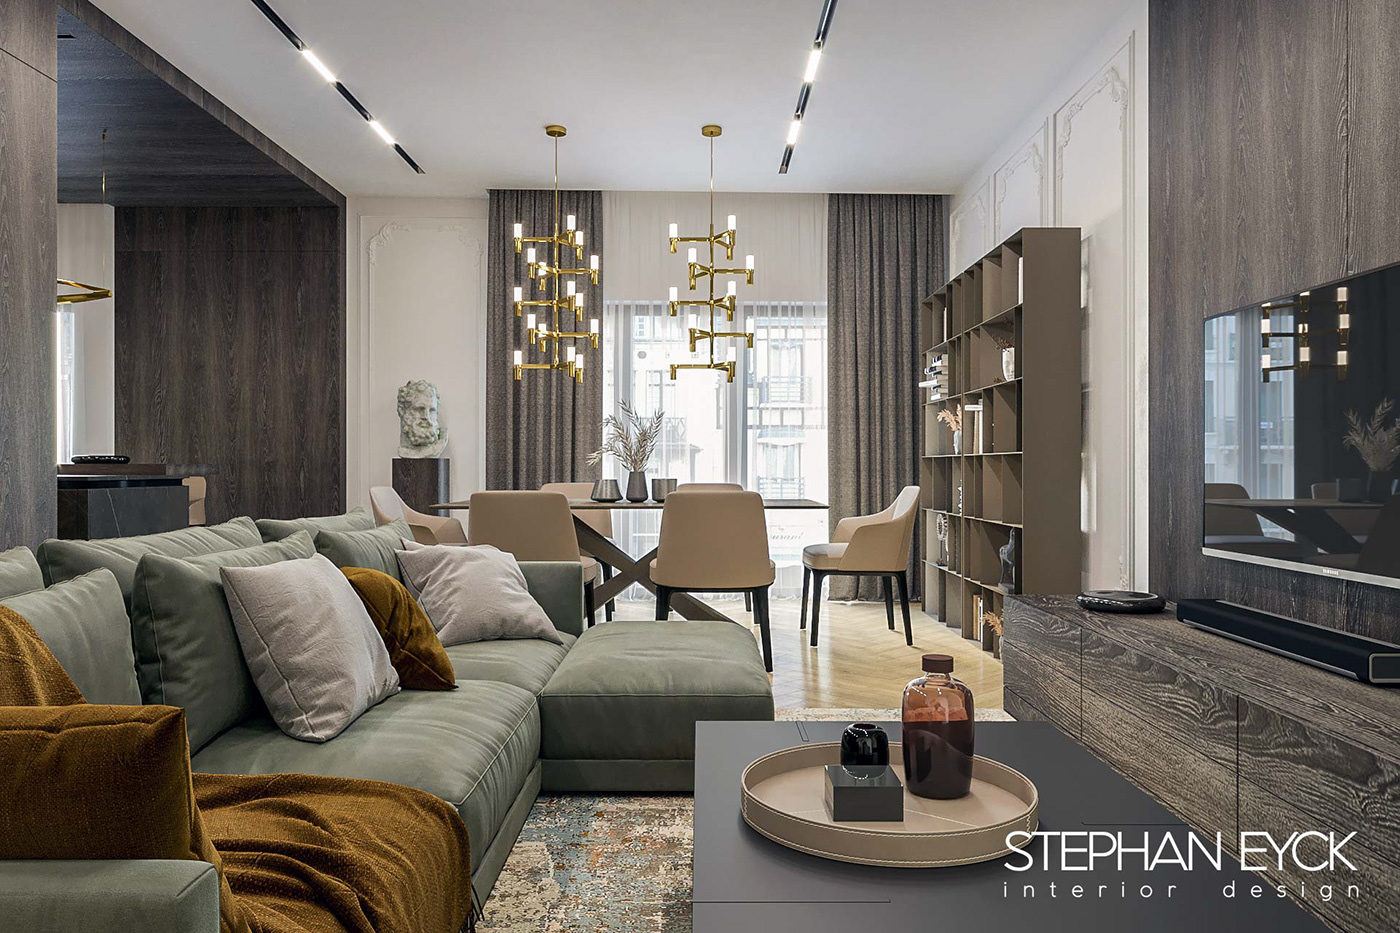 budapest corona render  design interior interior design  penthouse stephane eyck